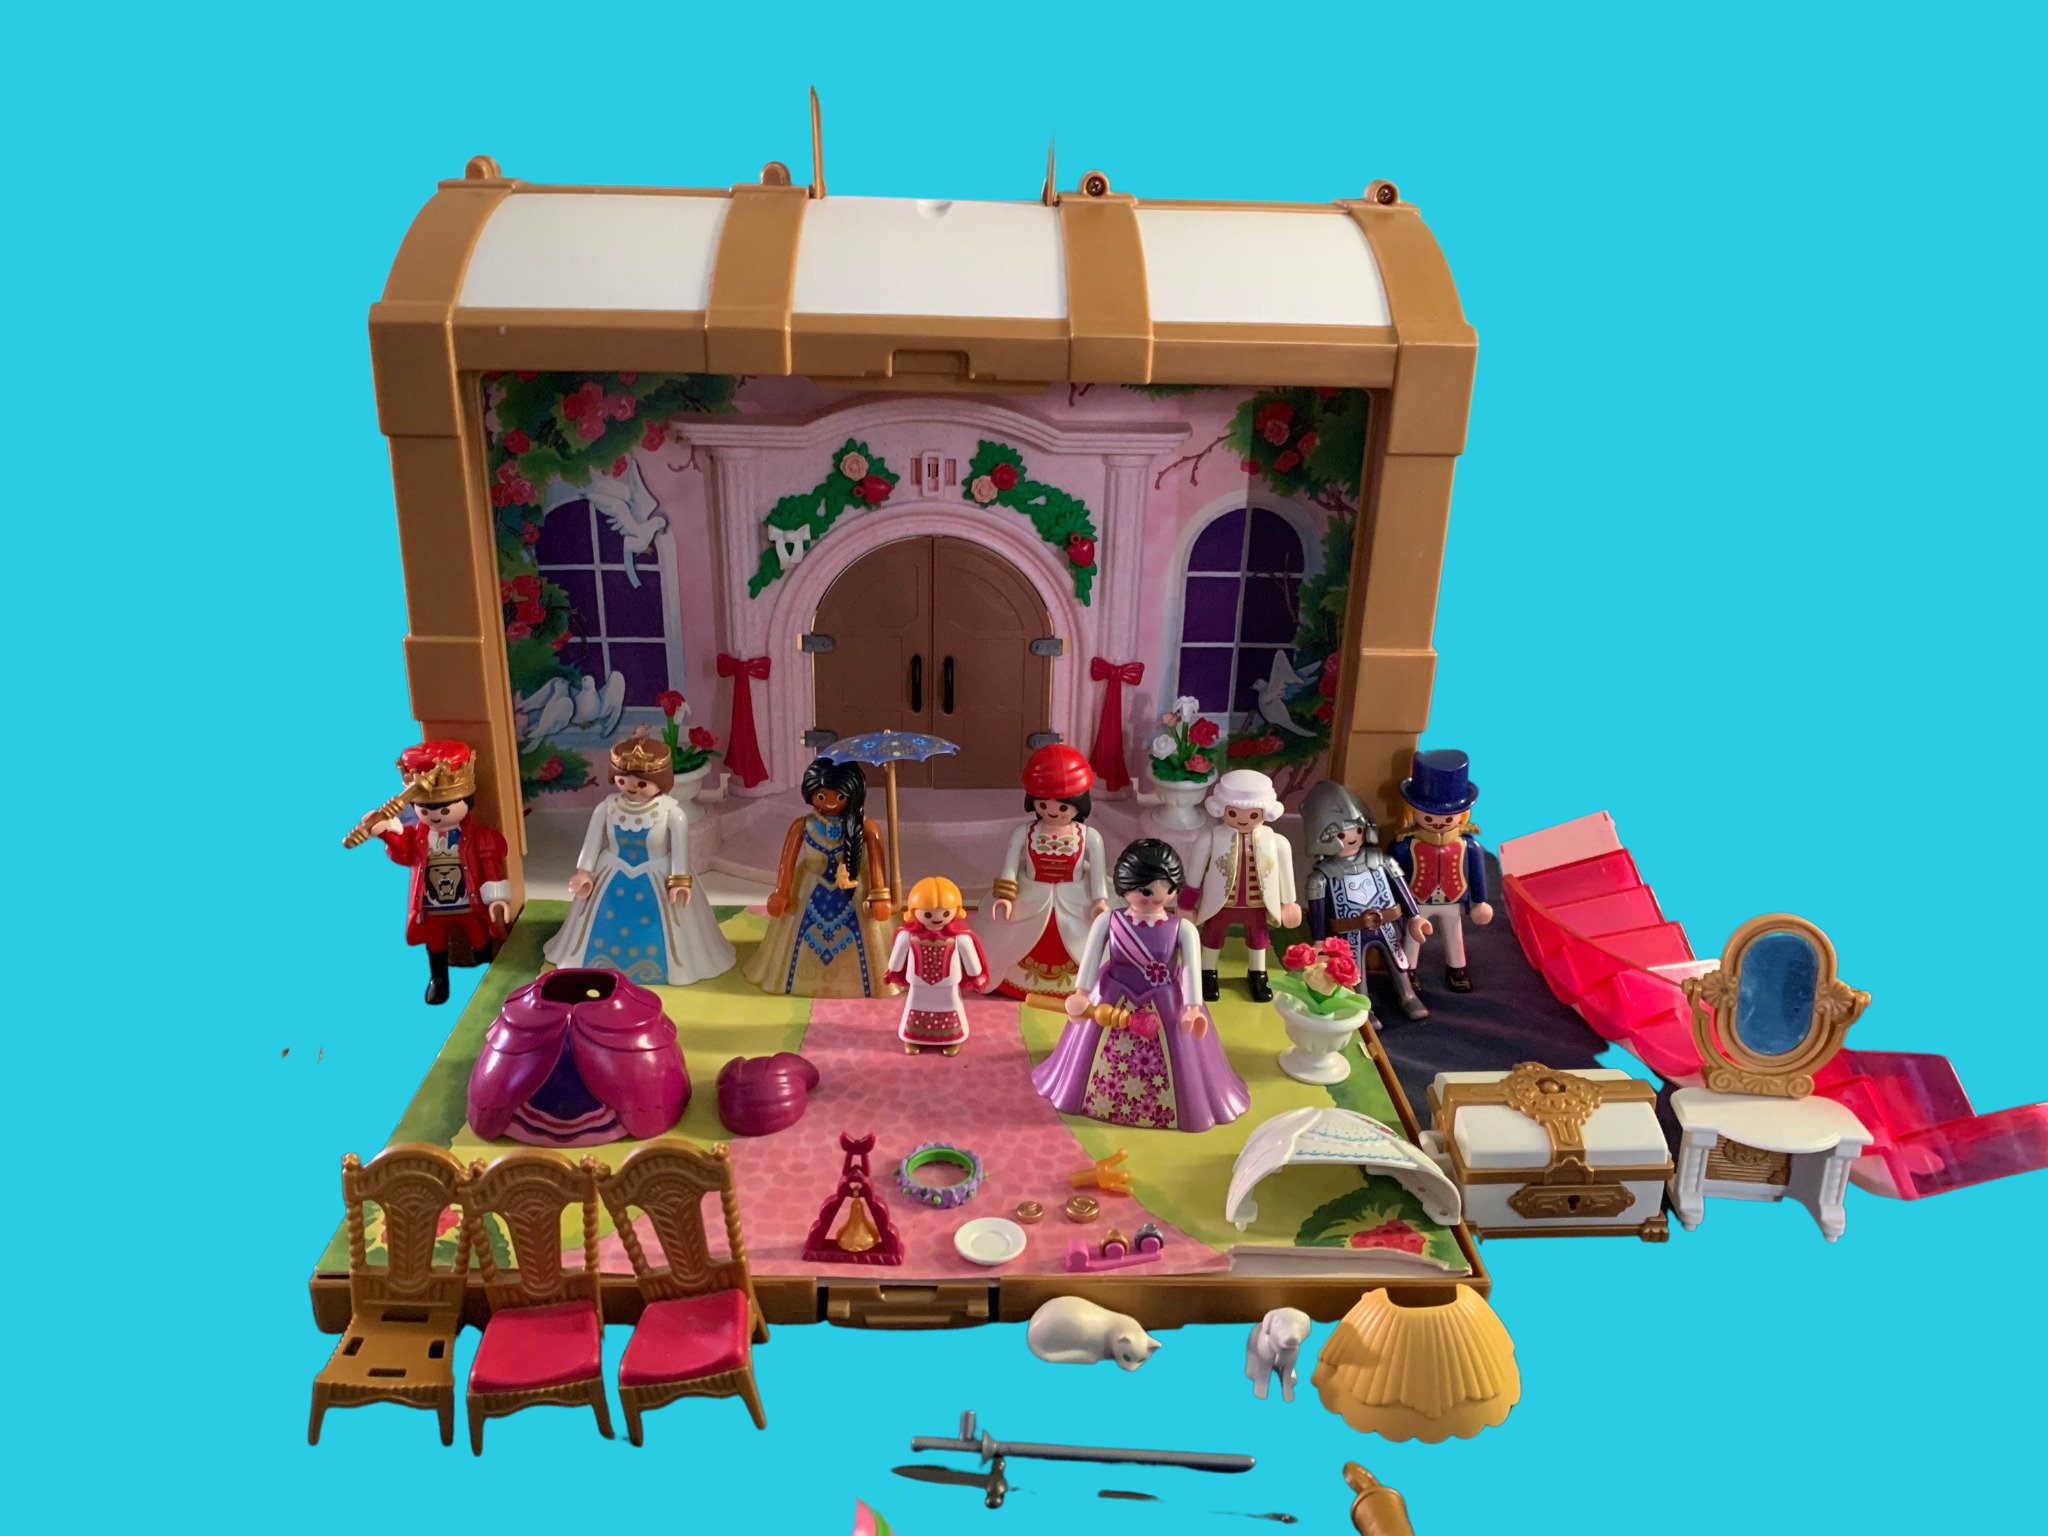 Playmobil Princess - Teaching Toys and Books